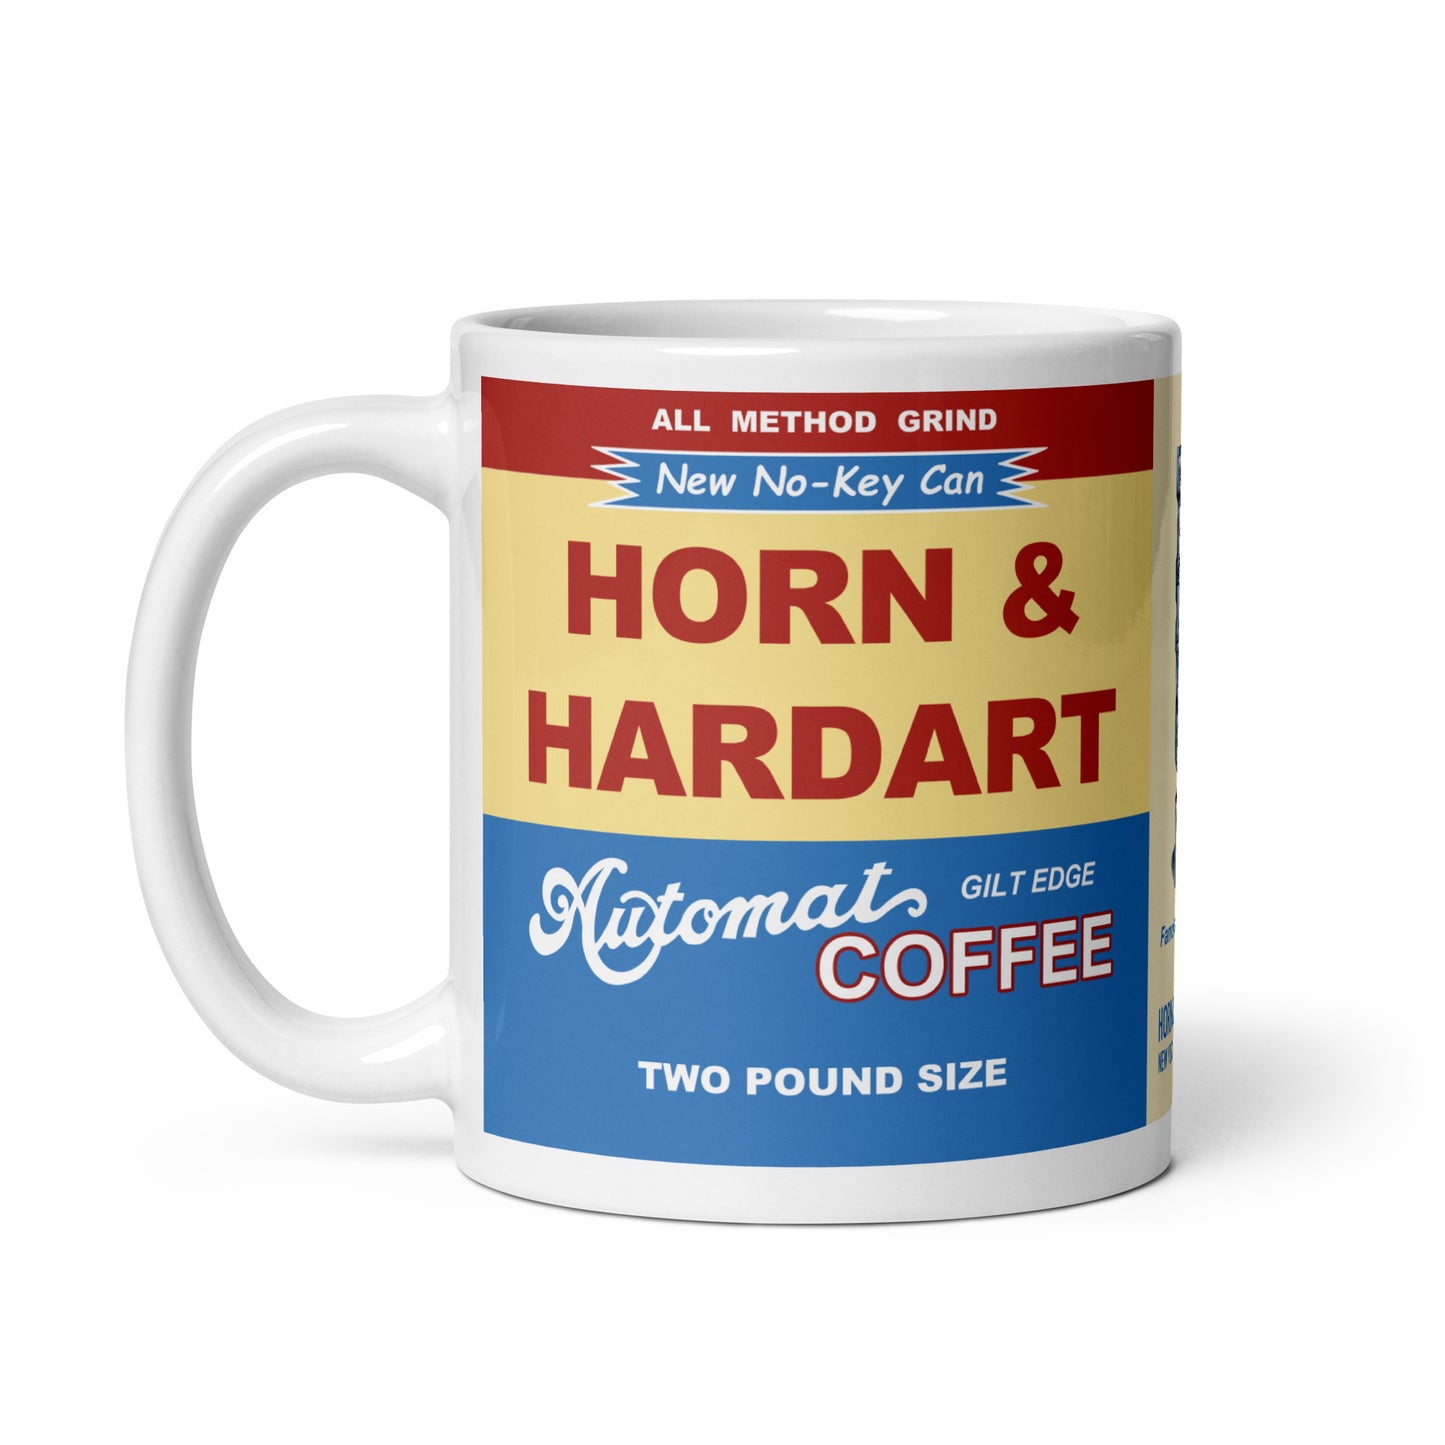 Horn & Hardart All Method Grind Coffee Mug